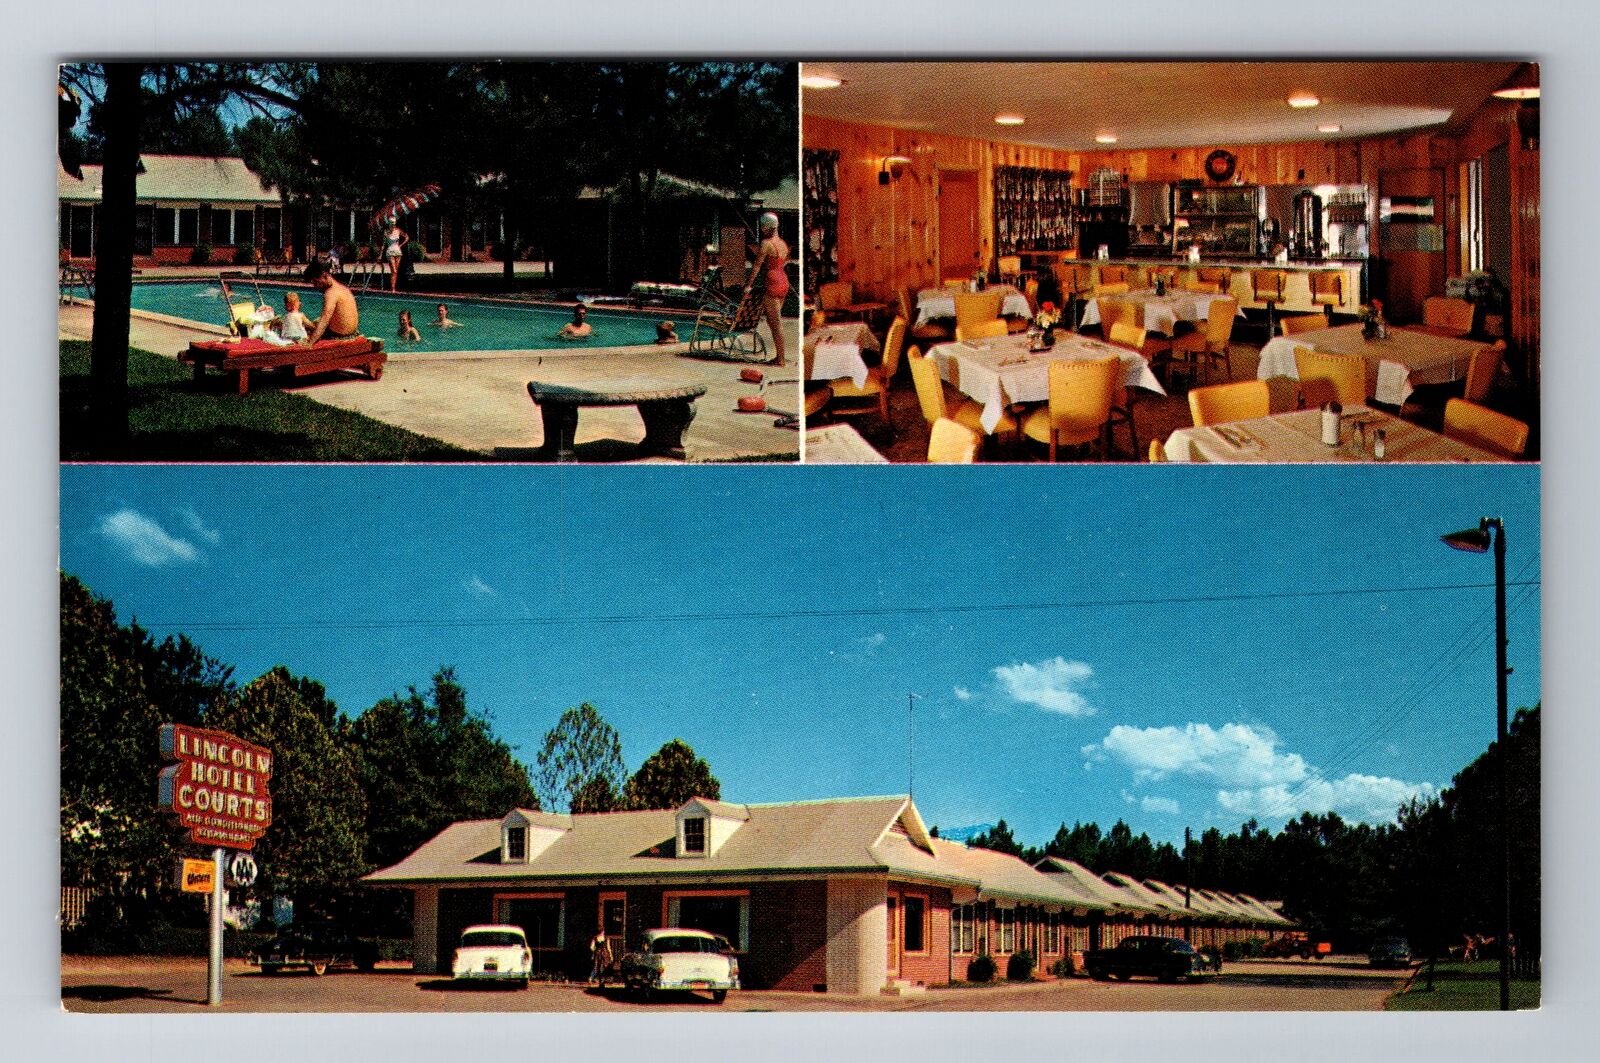 Ruston LA-Louisiana, Lincoln Hotel Courts, Advertising Souvenir Vintage Postcard